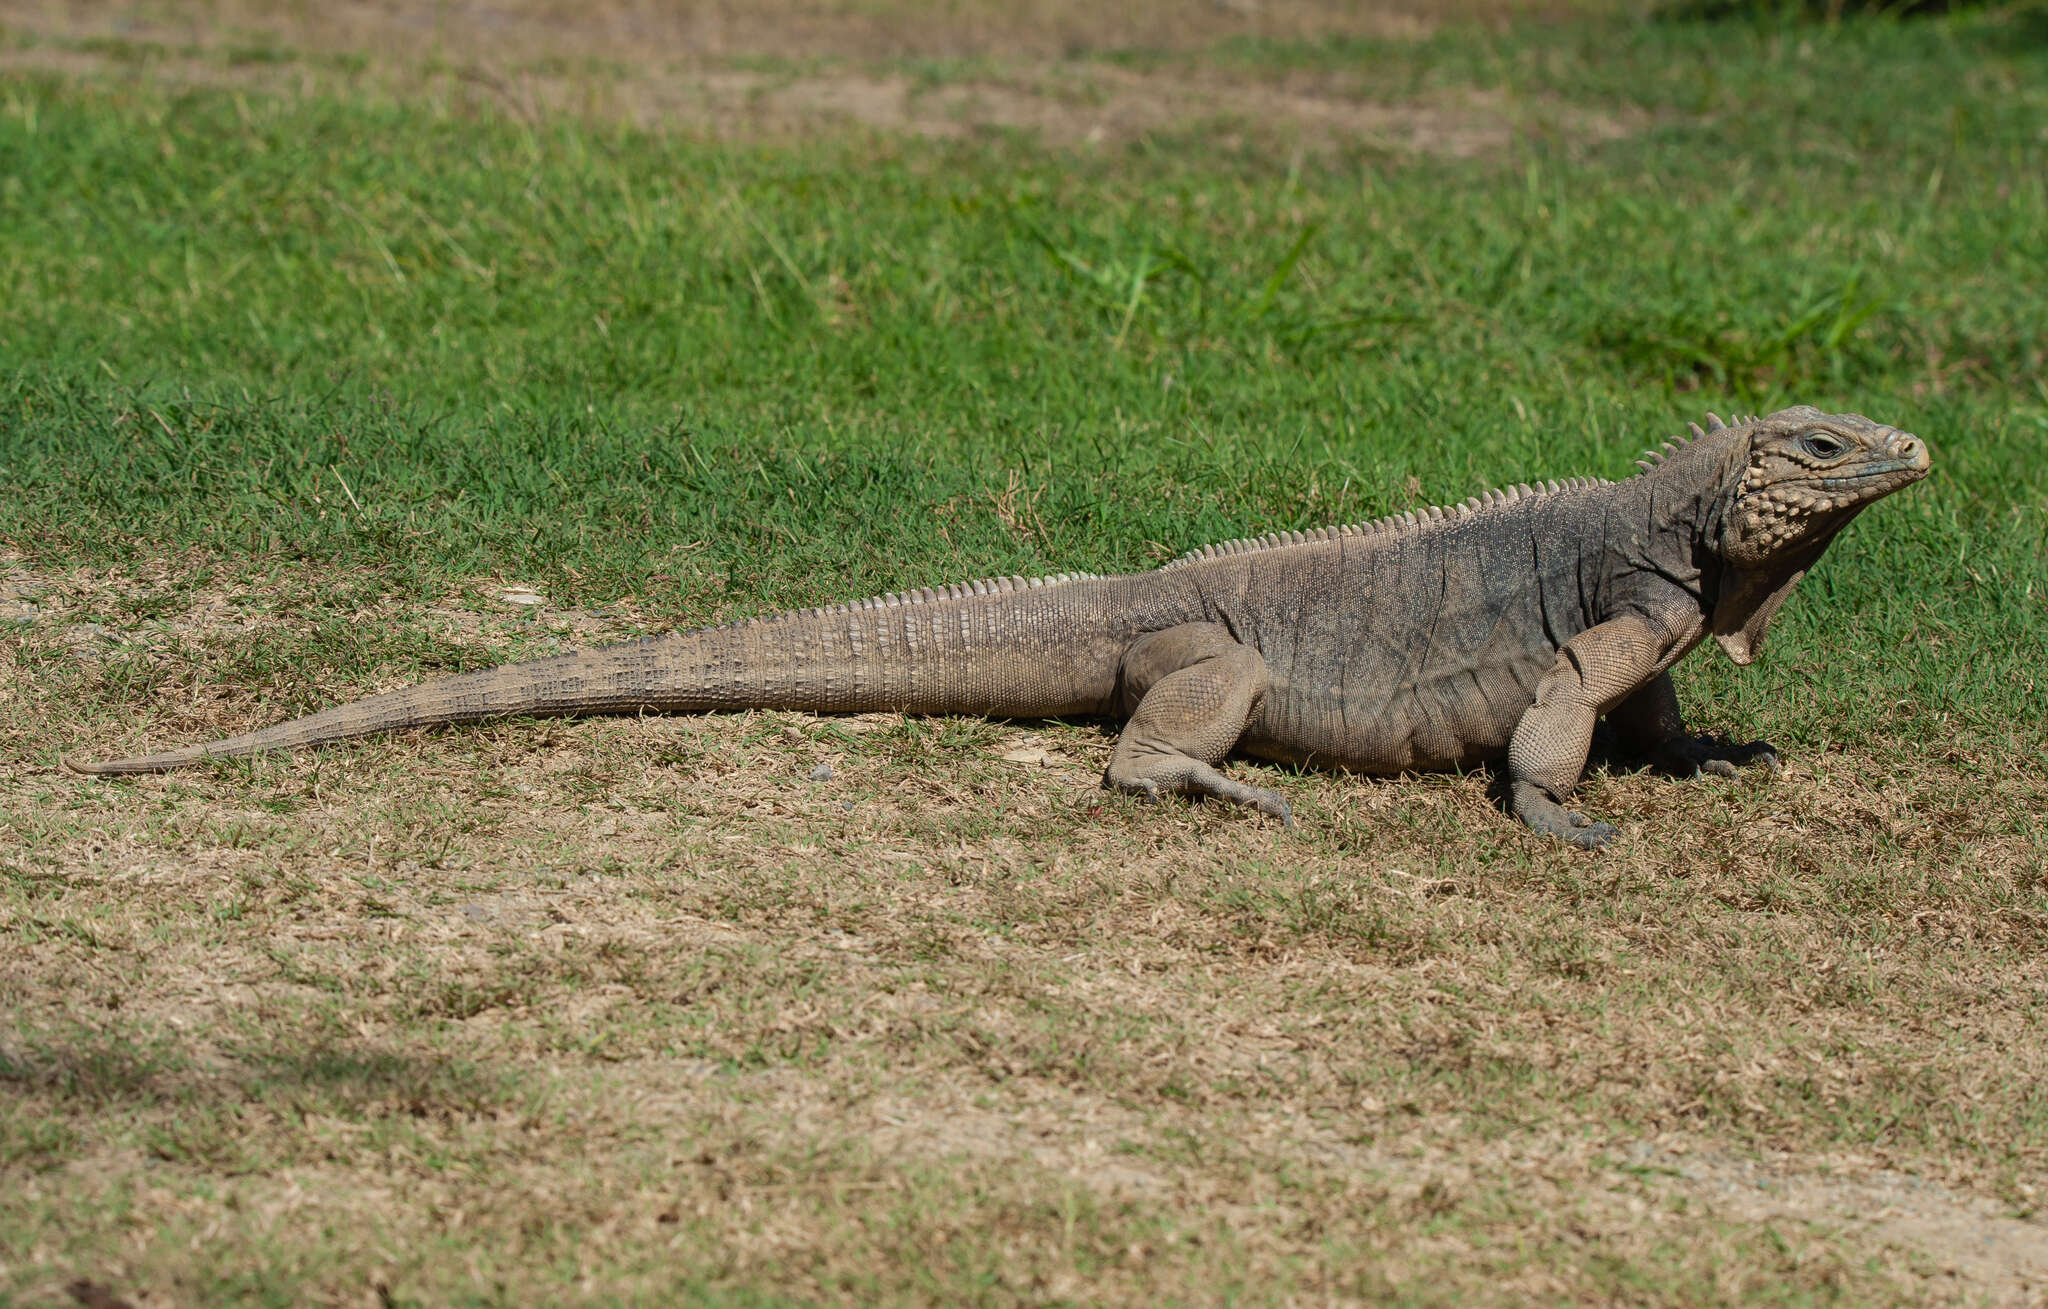 Image of Cayman Islands Ground Iguana